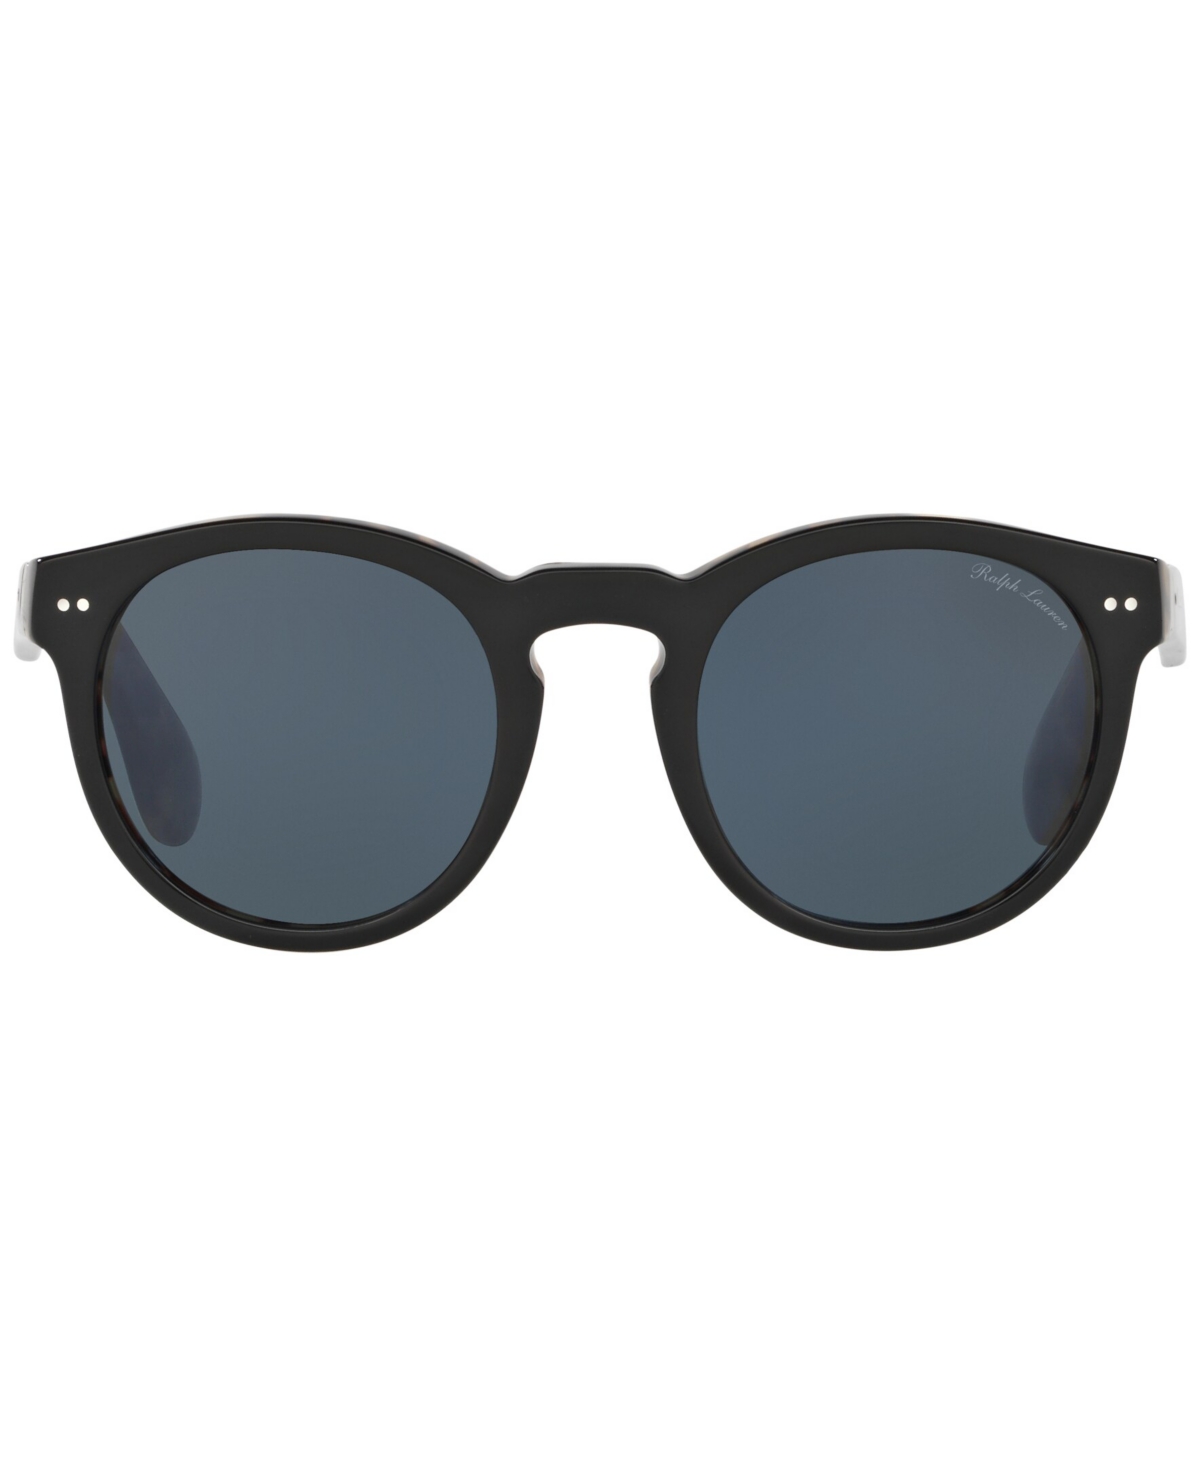 Ralph Lauren Women's Sunglasses, Rl8146p49-x 49 In Shiny Black On Spotty Havana